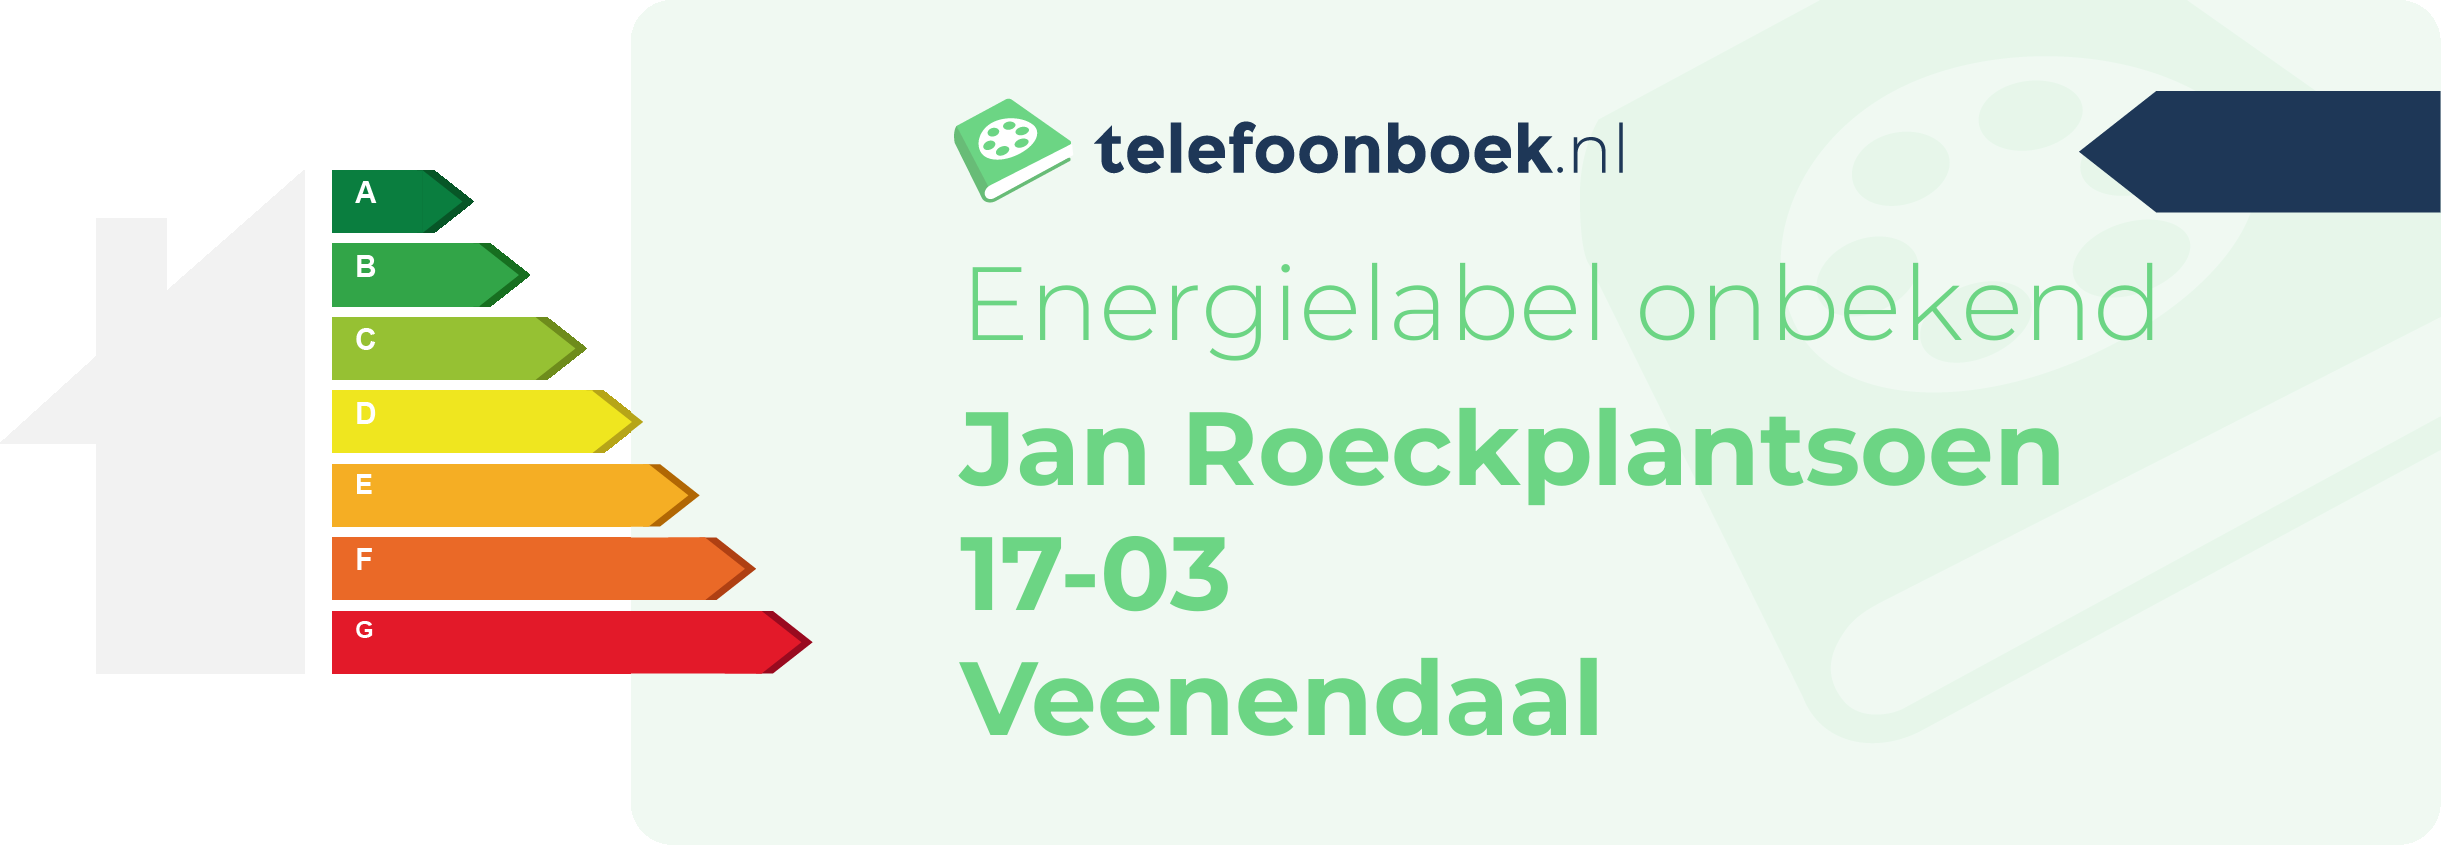 Energielabel Jan Roeckplantsoen 17-03 Veenendaal